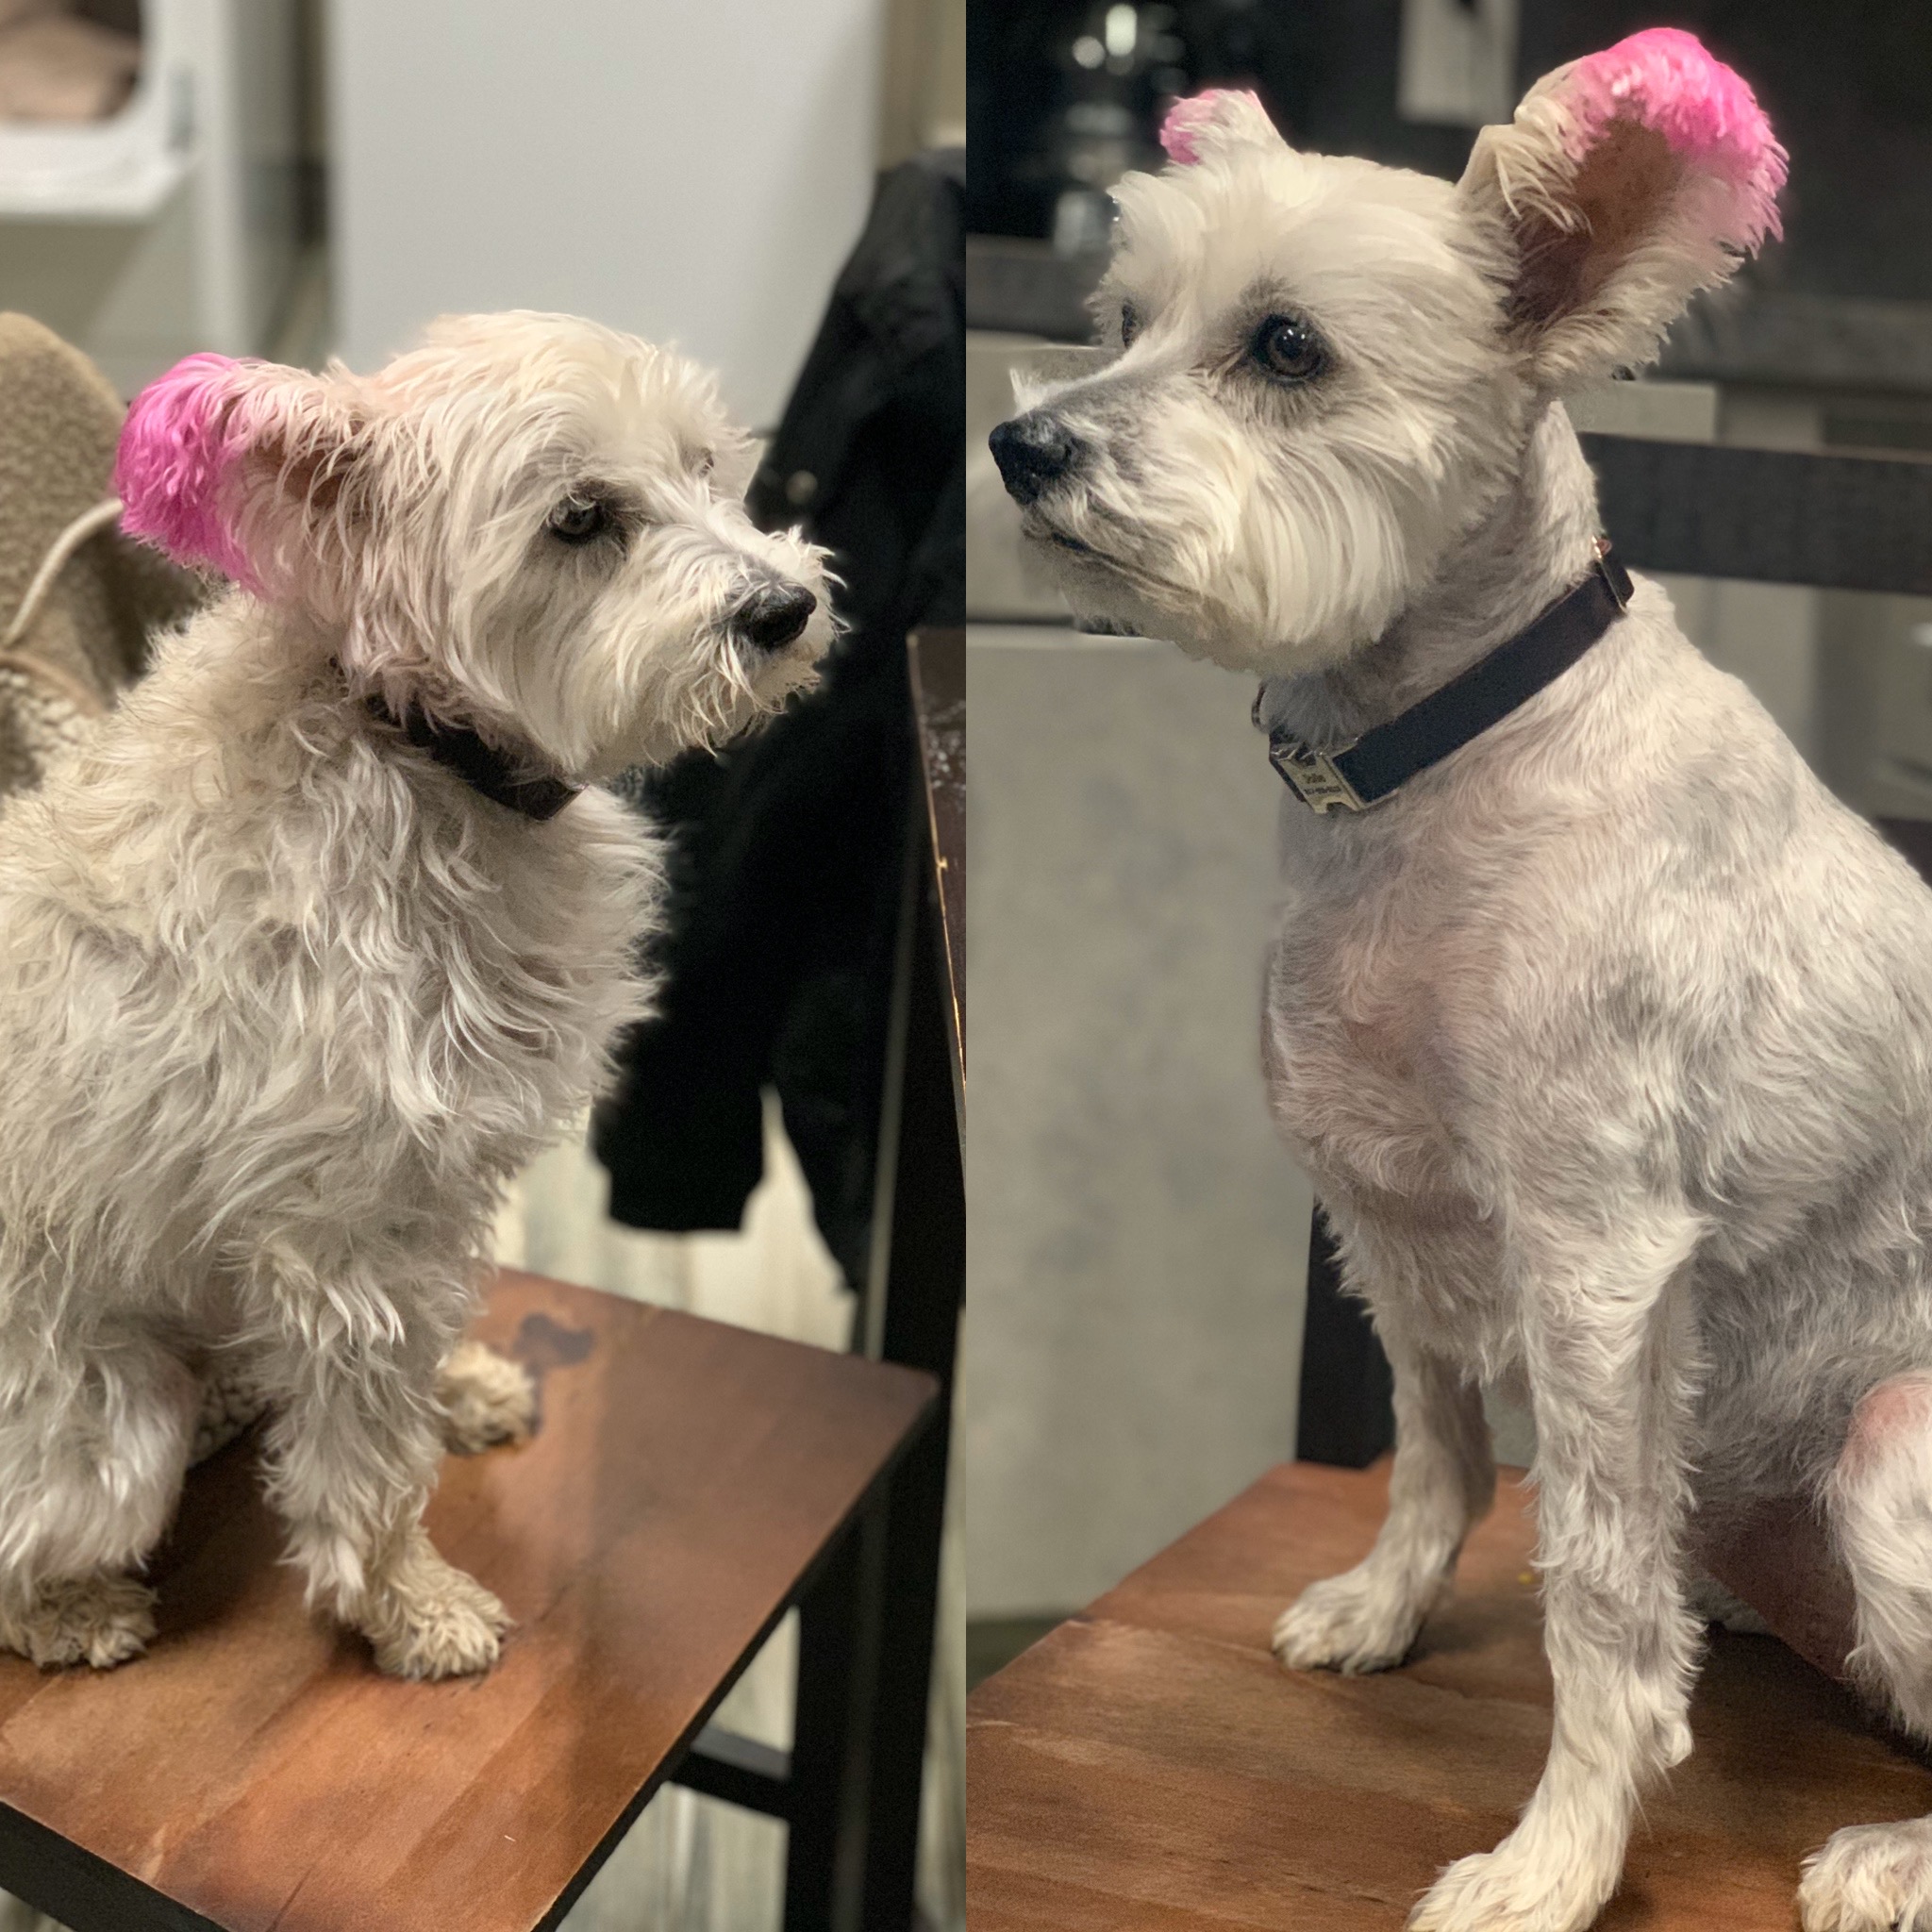 freshly groomed dog with pink ear hair